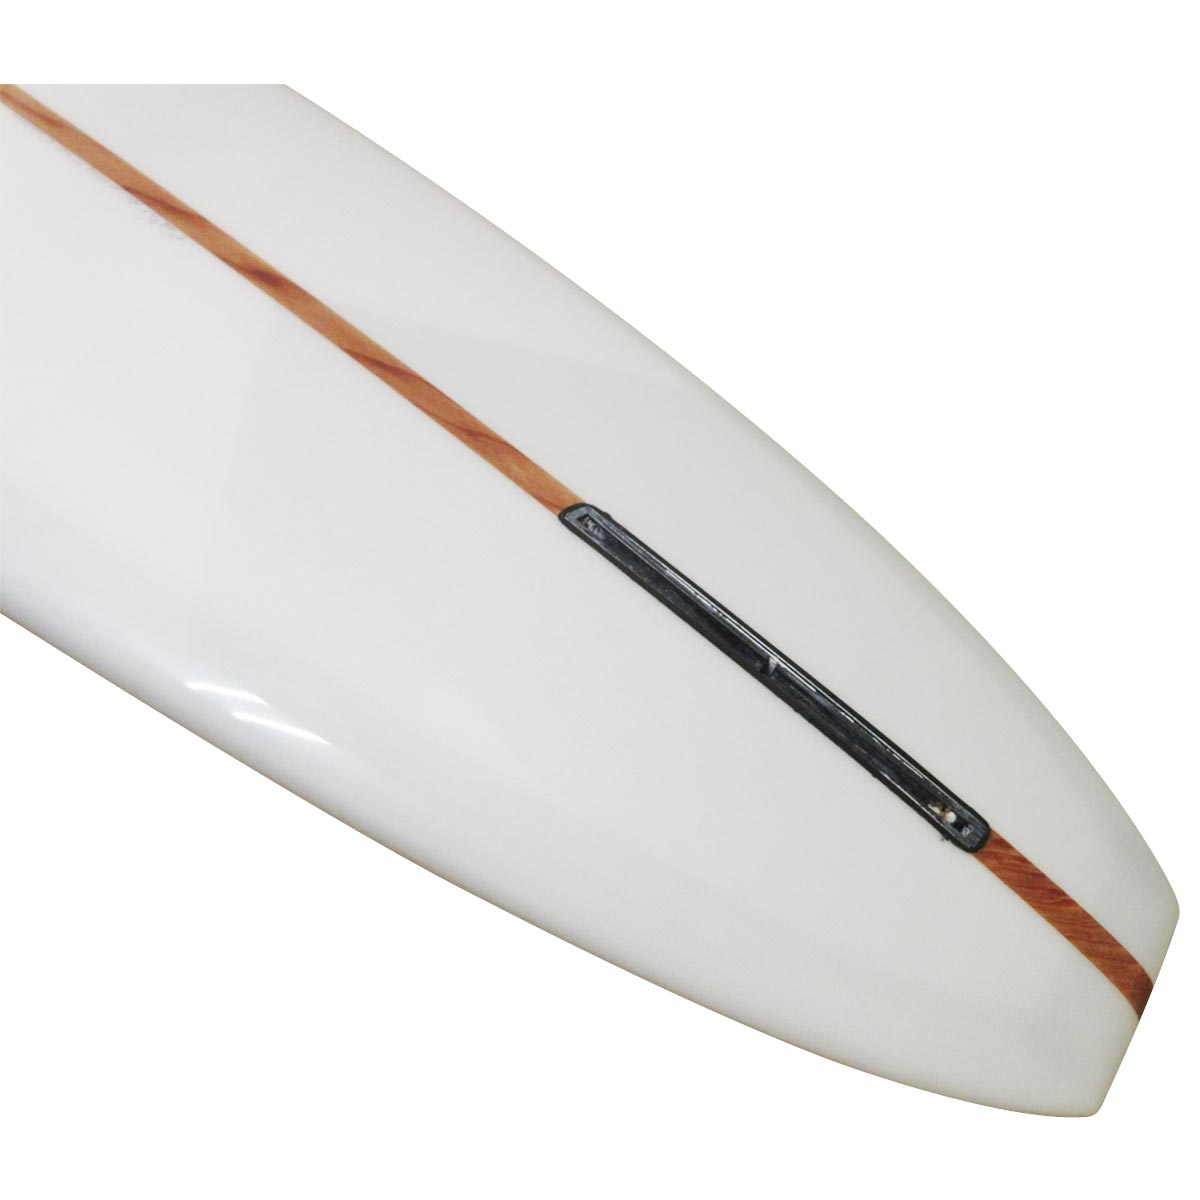 WESTON SURFBOARDS / AXIS 9`6